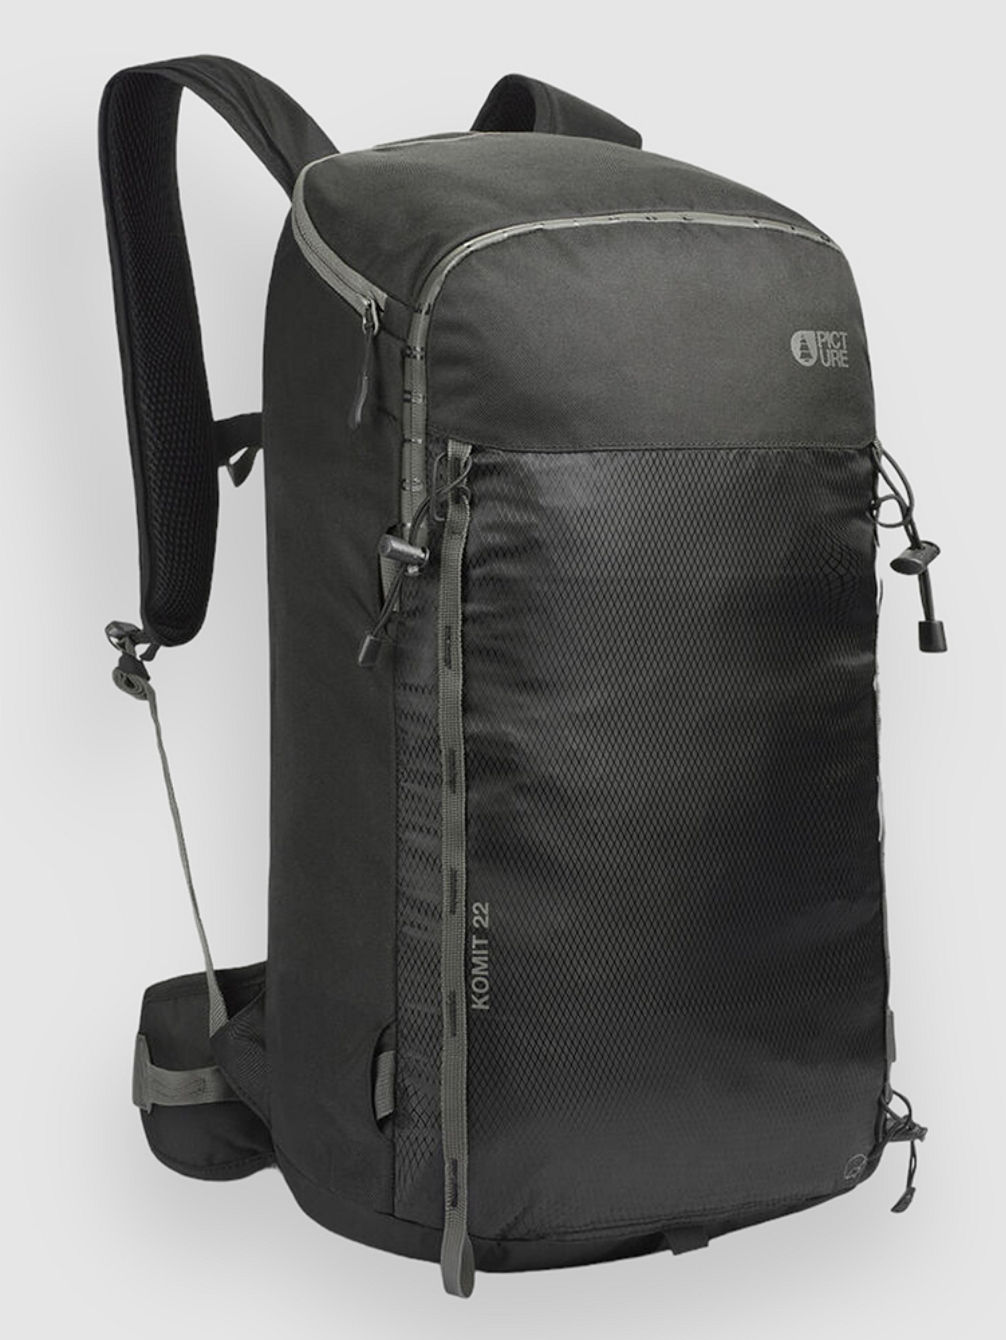 Komit 22 Backpack